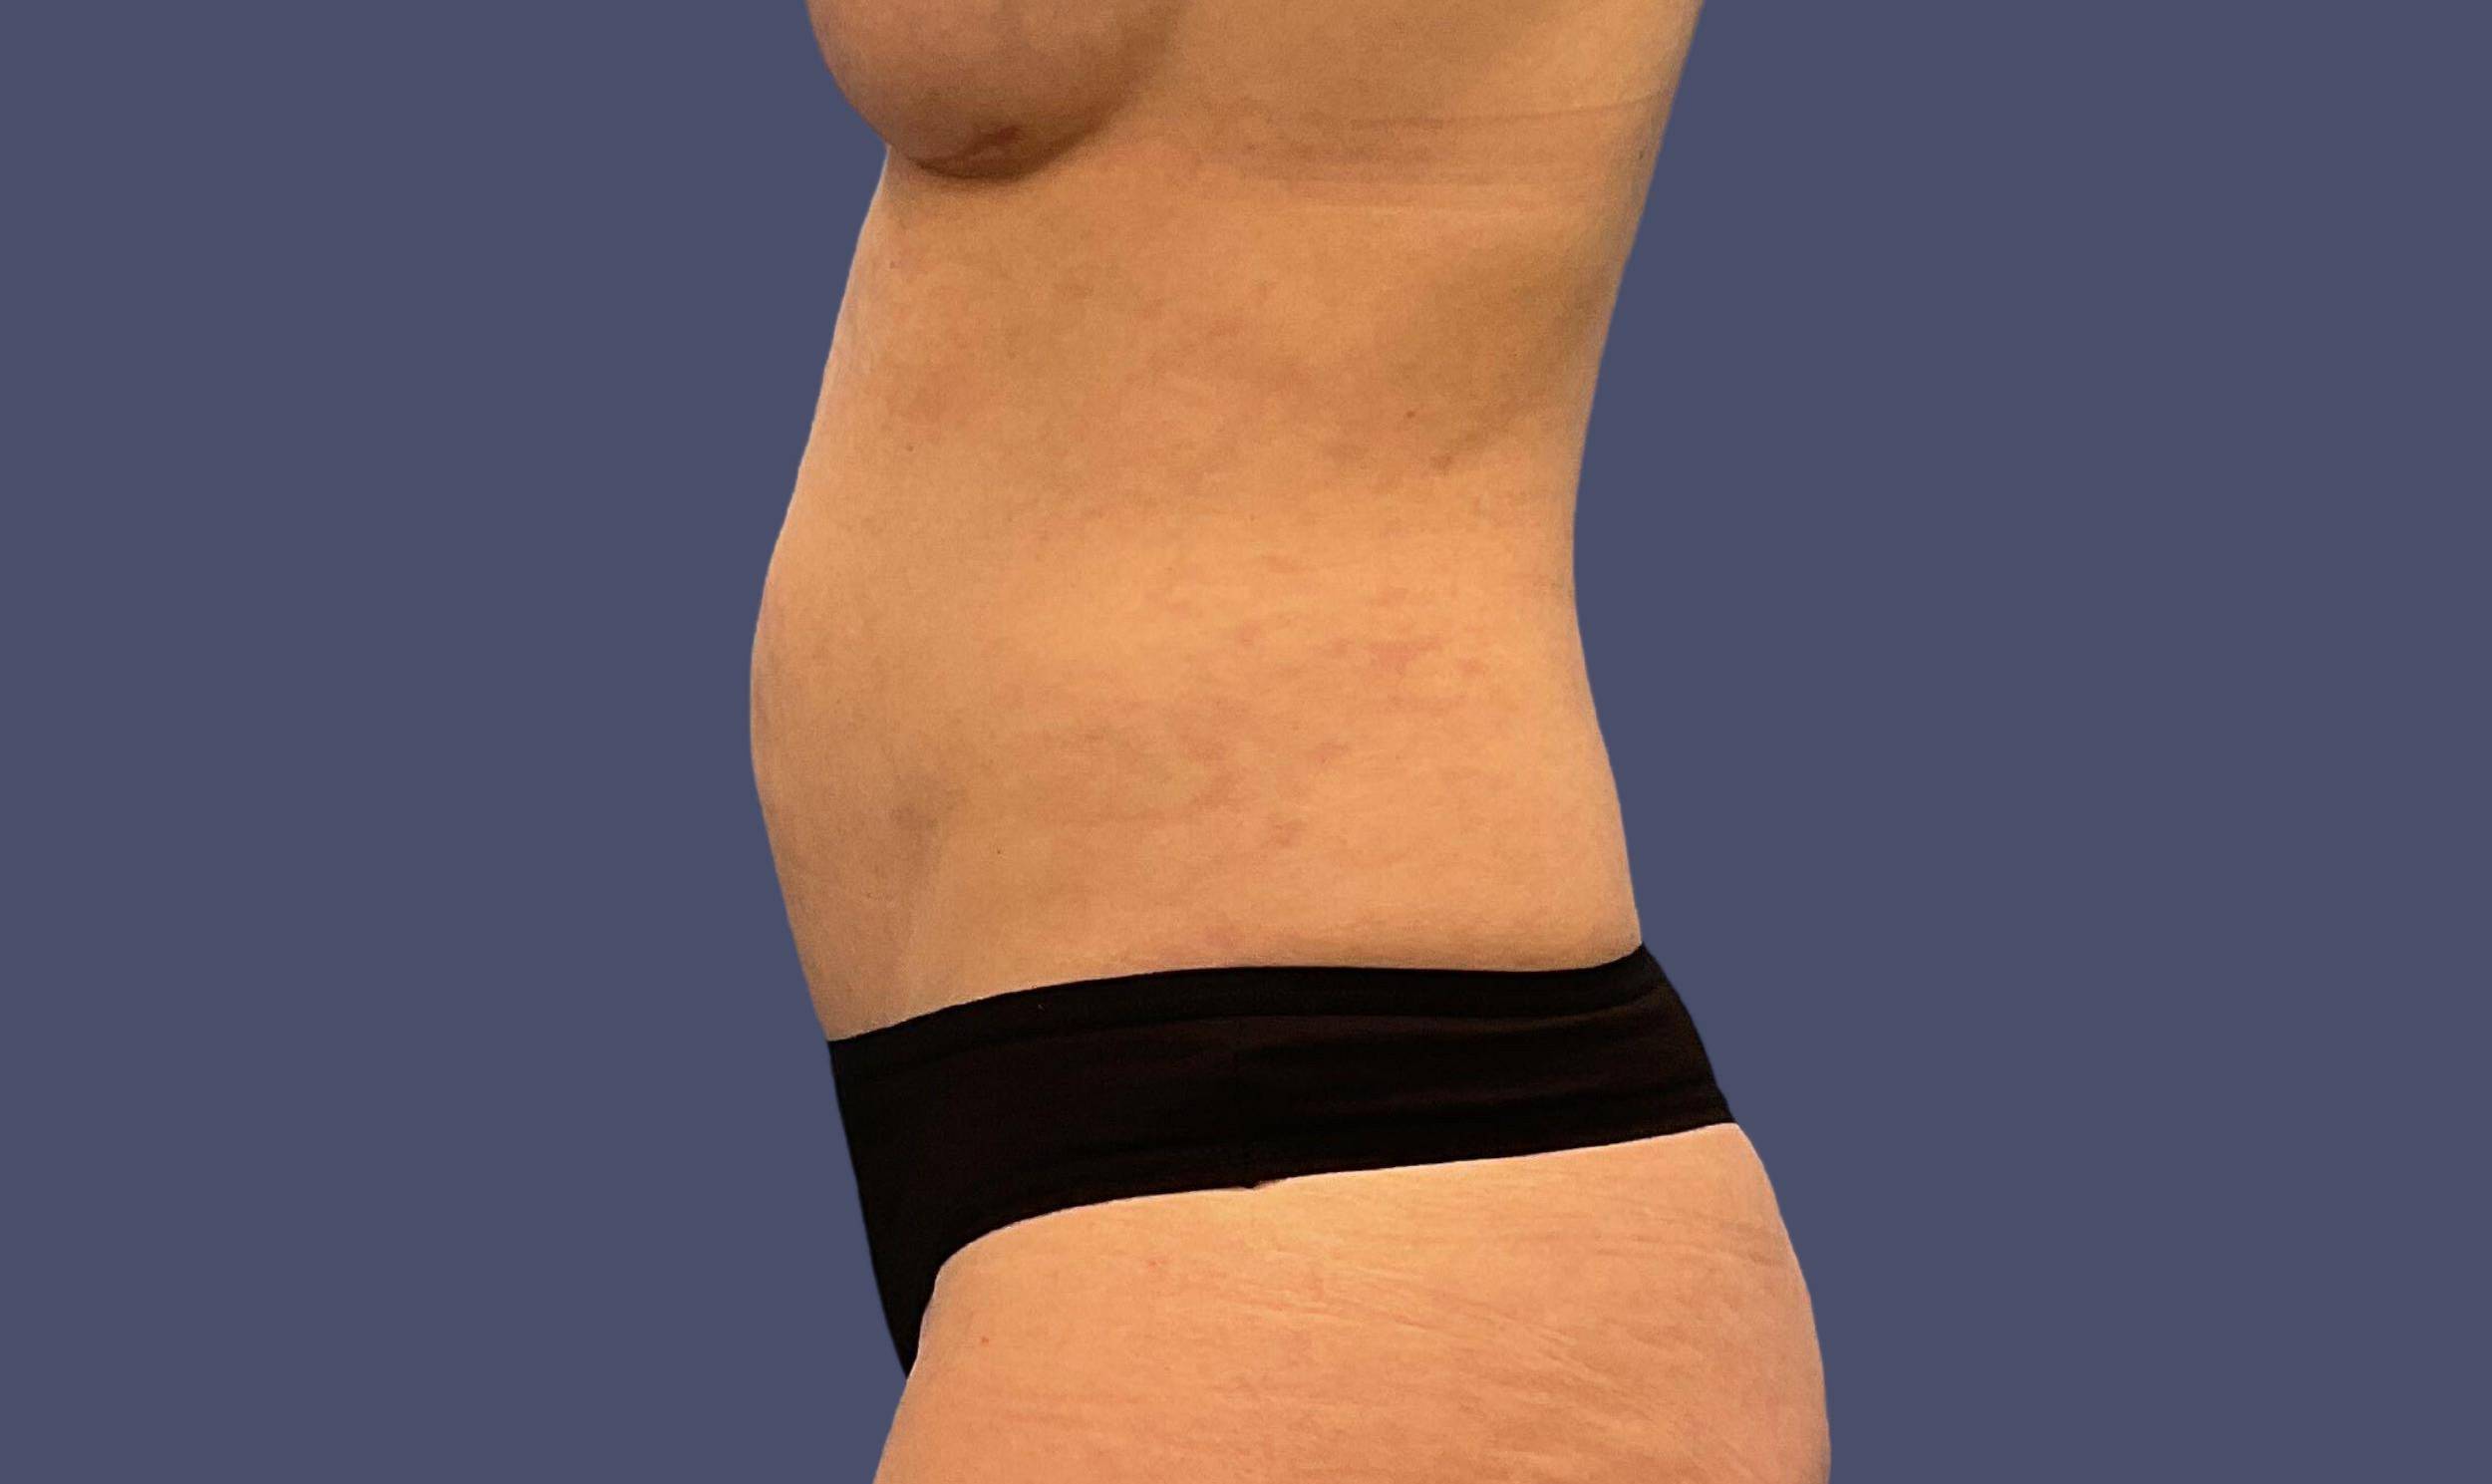 Liposuction 3 - Abdomen After